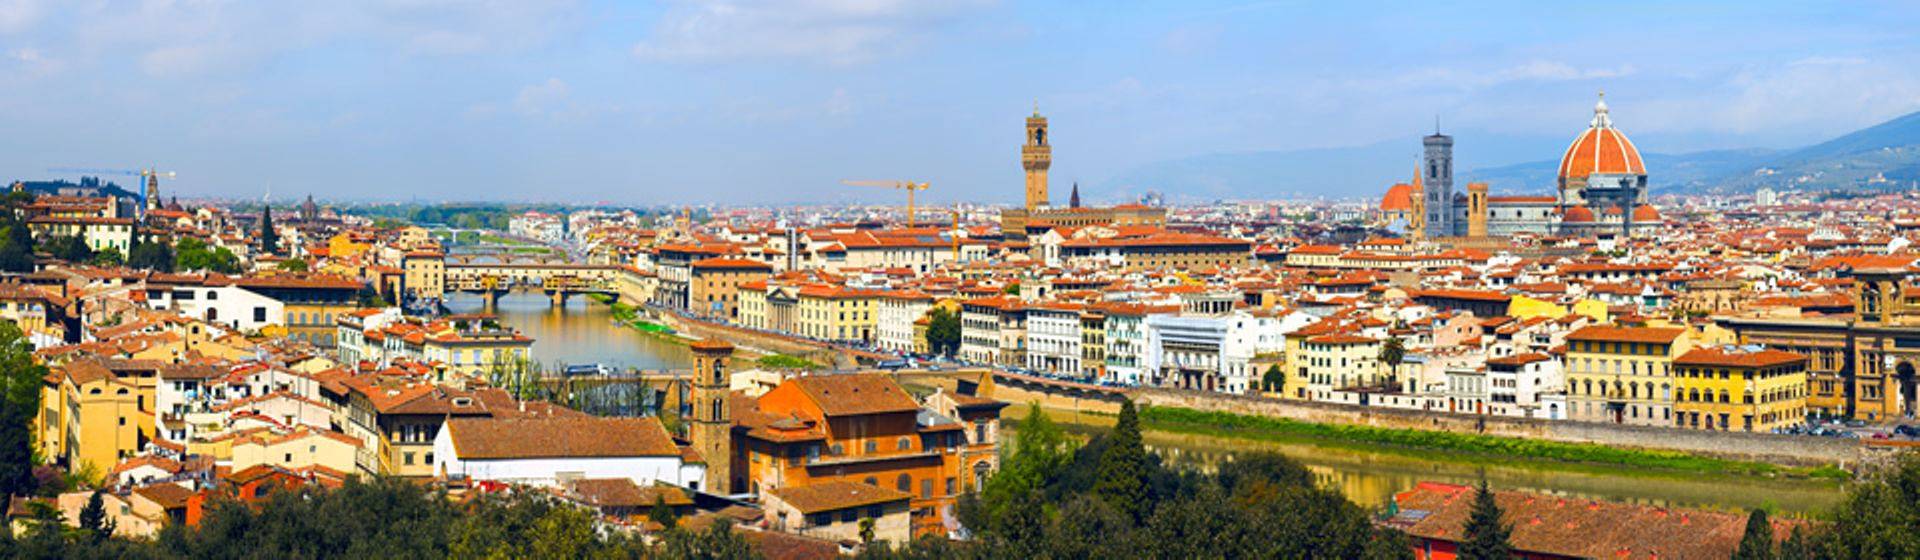 Holidays to Florence Image